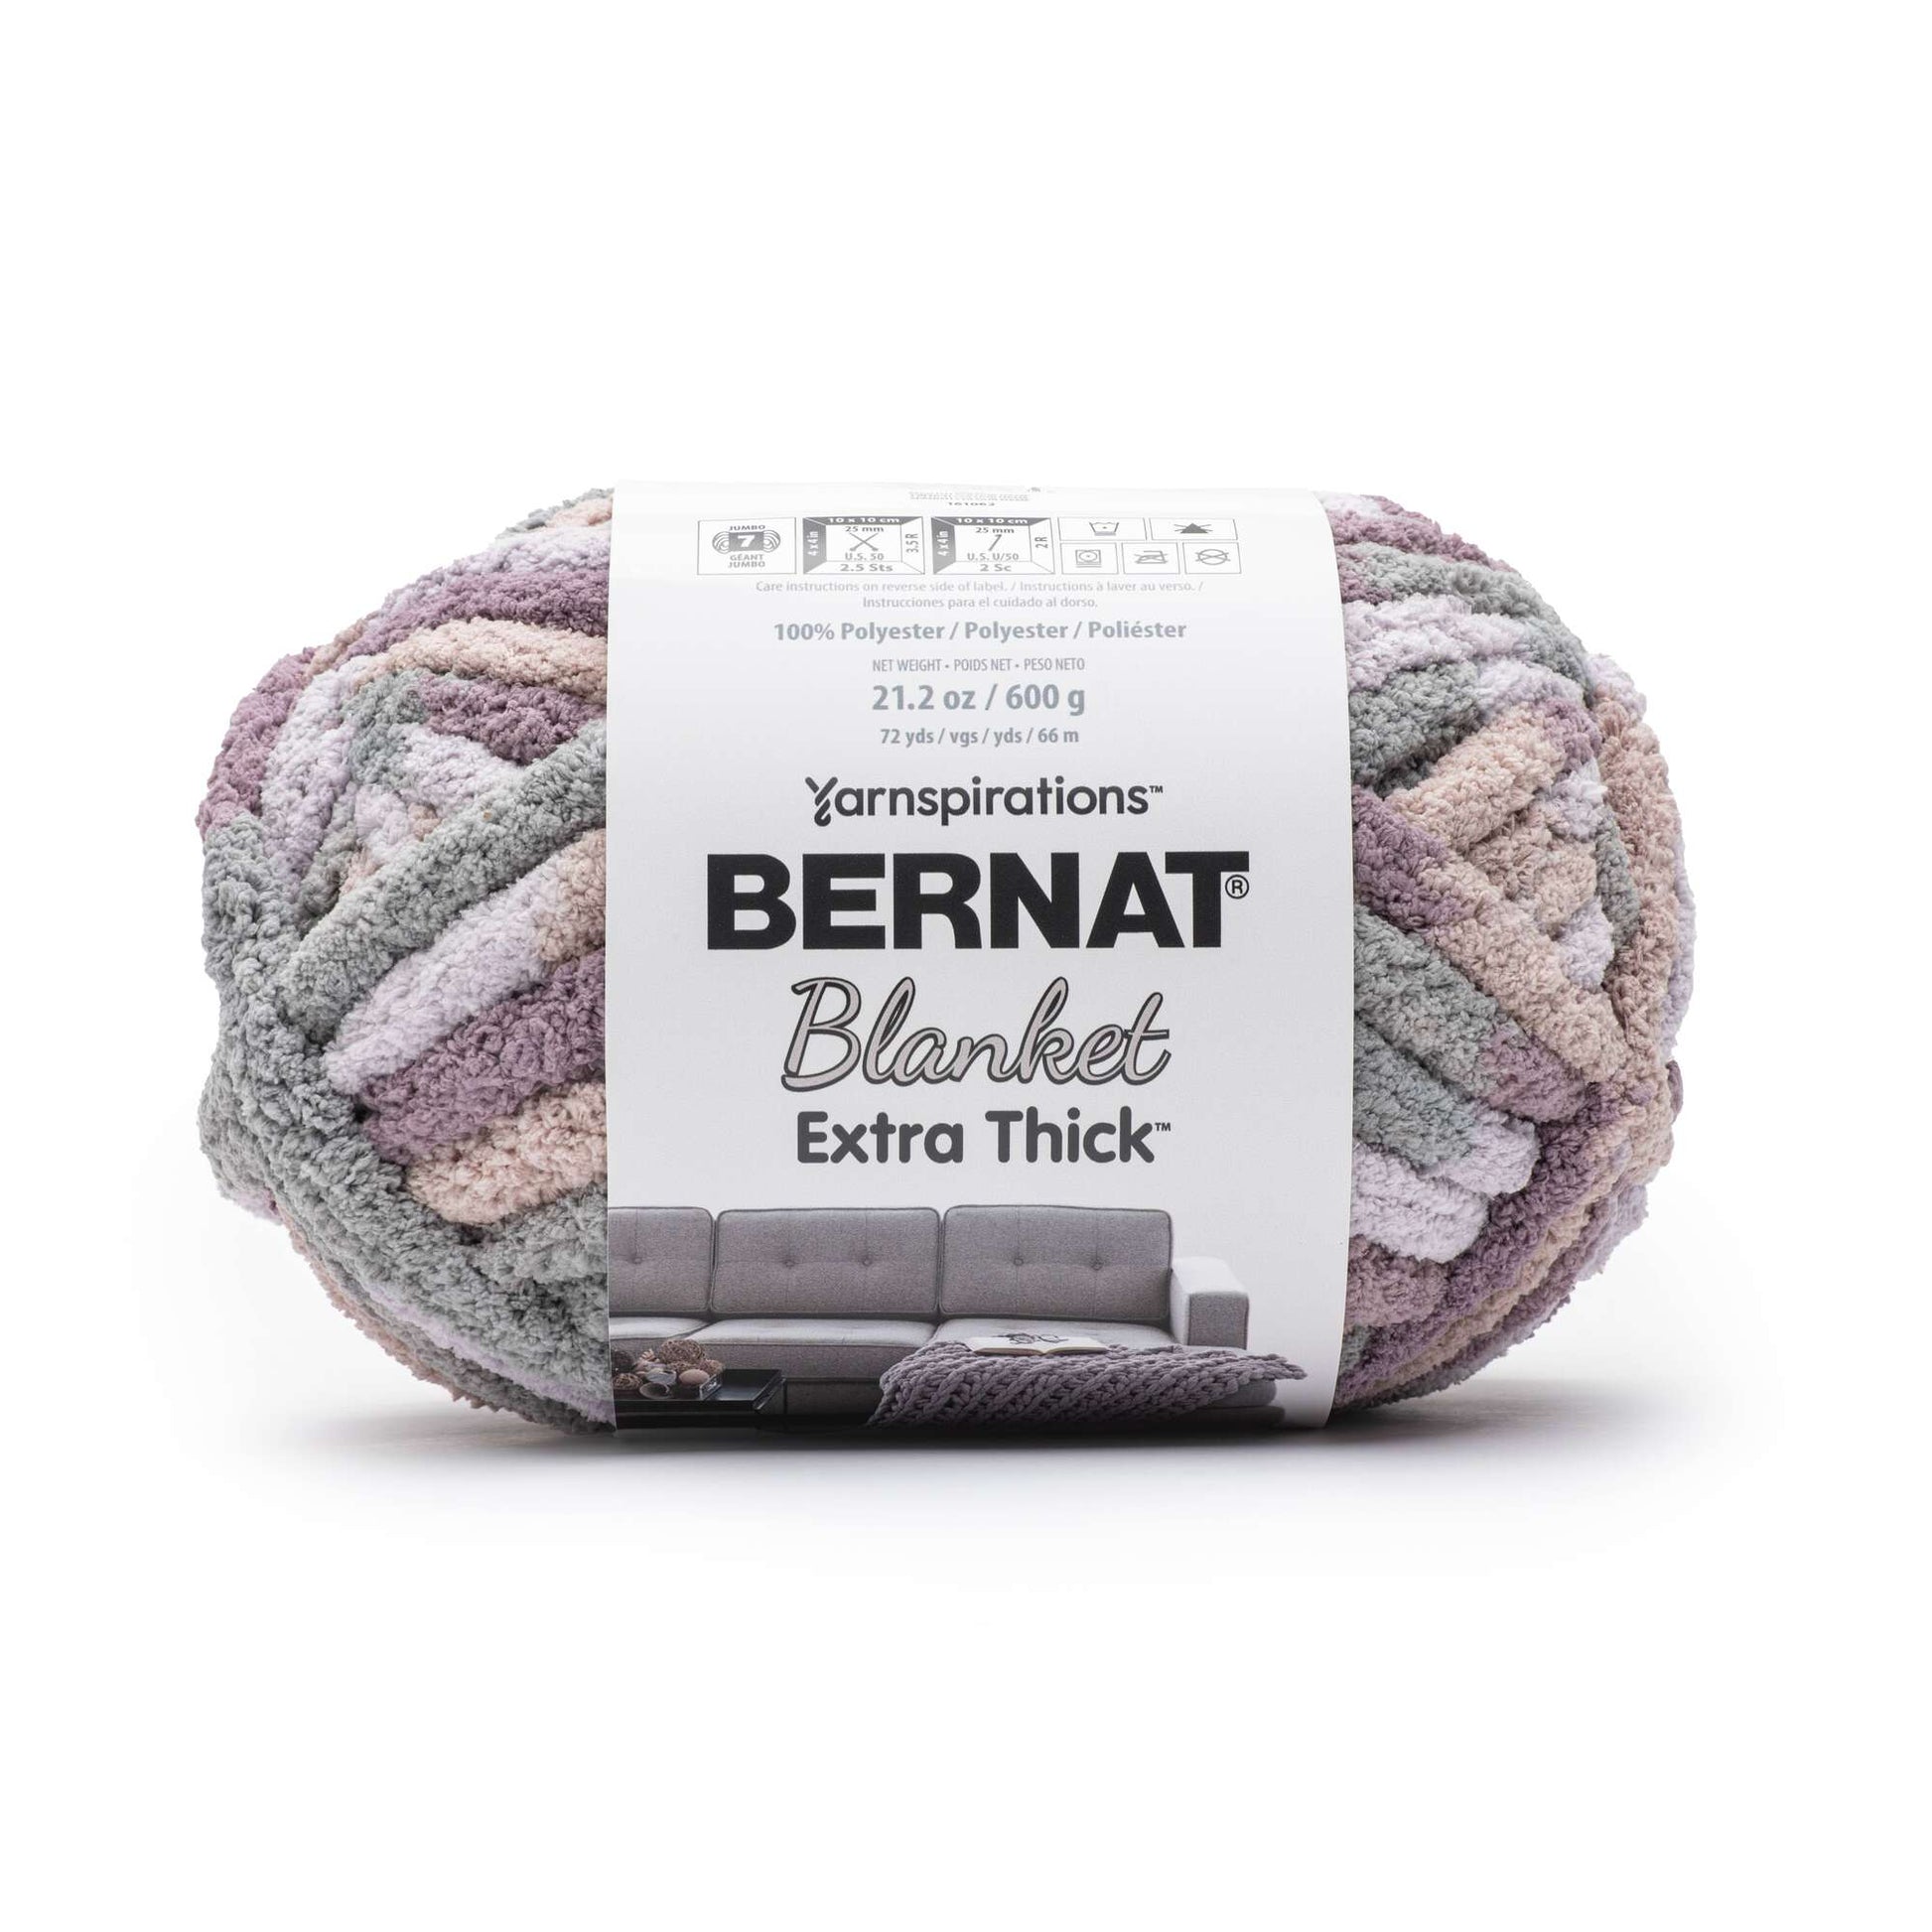 Bernat Blanket Extra Thick Yarn (600g/21.2oz) - Discontinued Shades Purple Smoke